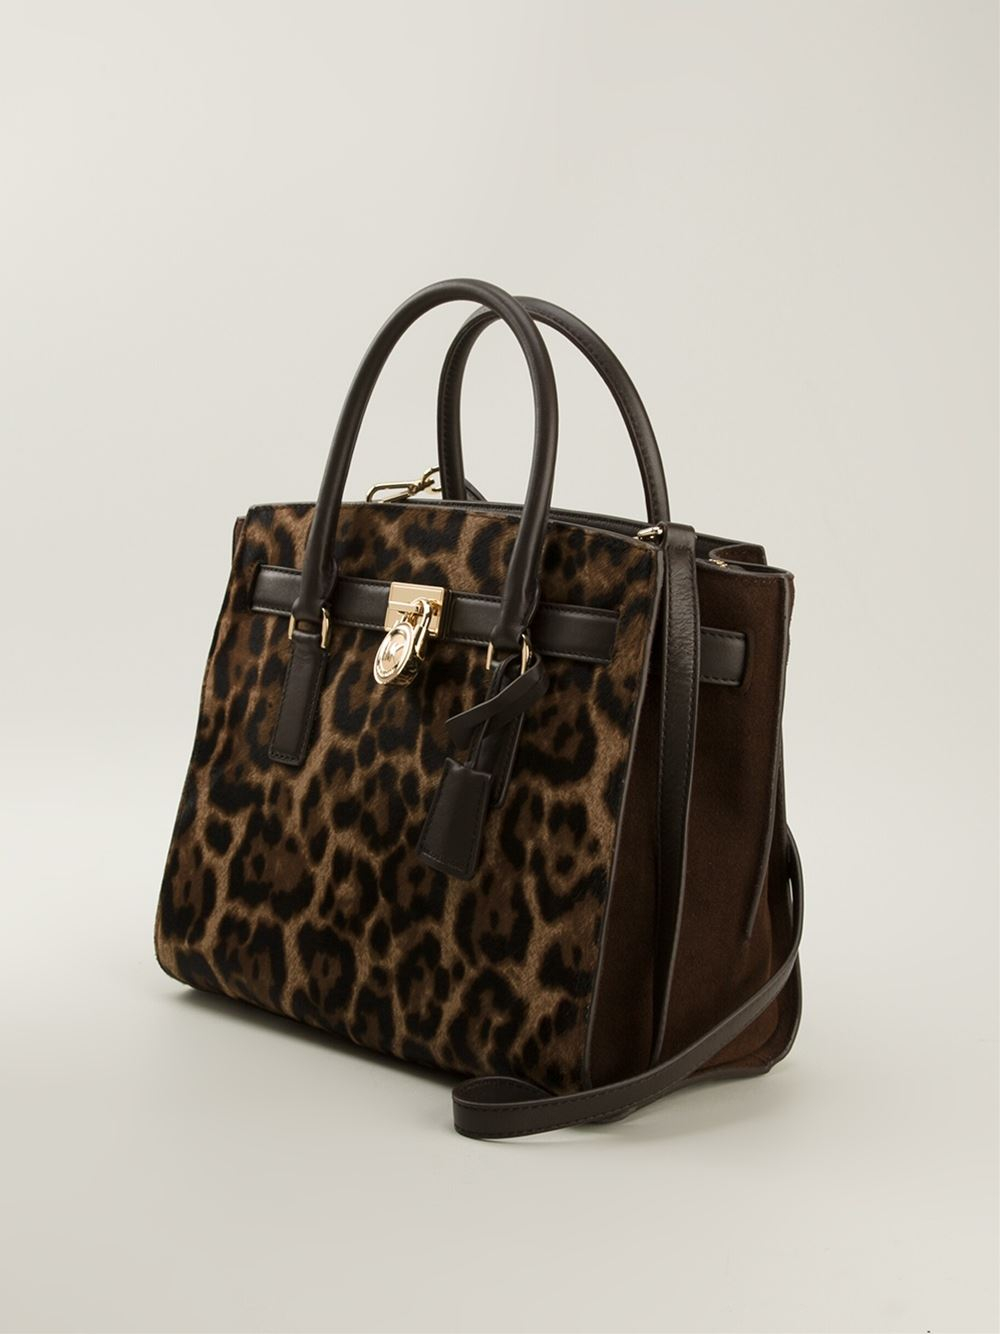 Michael Kors Leopard Bags & Handbags for Women | eBay